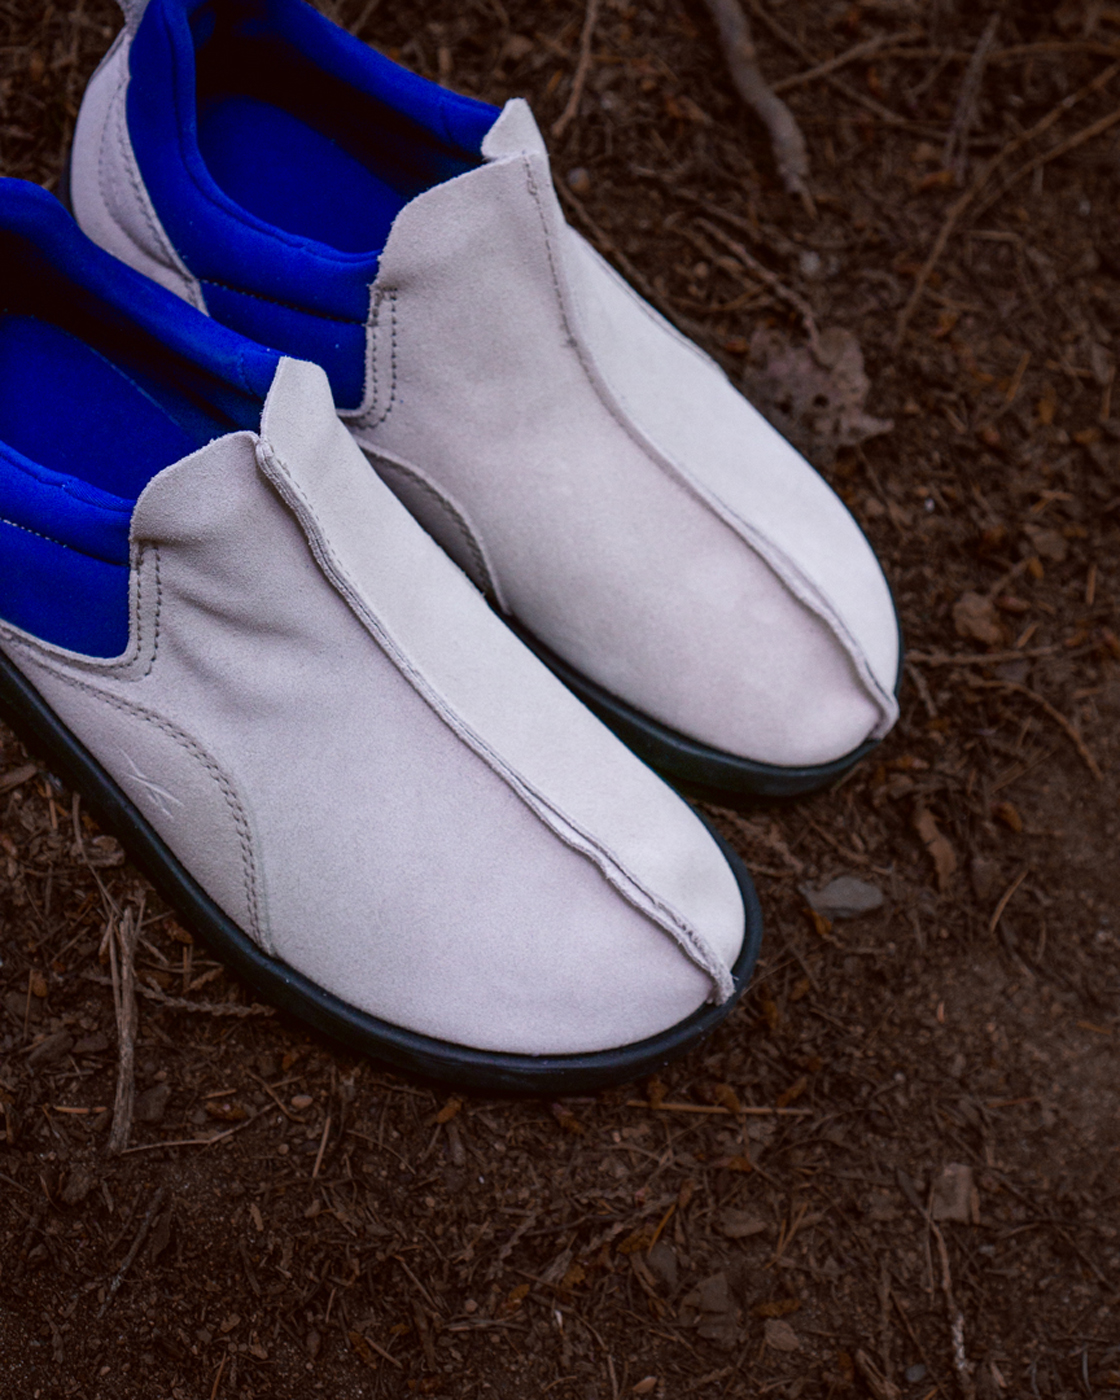 Reebok's Beatnik Moc Makes the Trek Sandal Into a Rugged Shoe